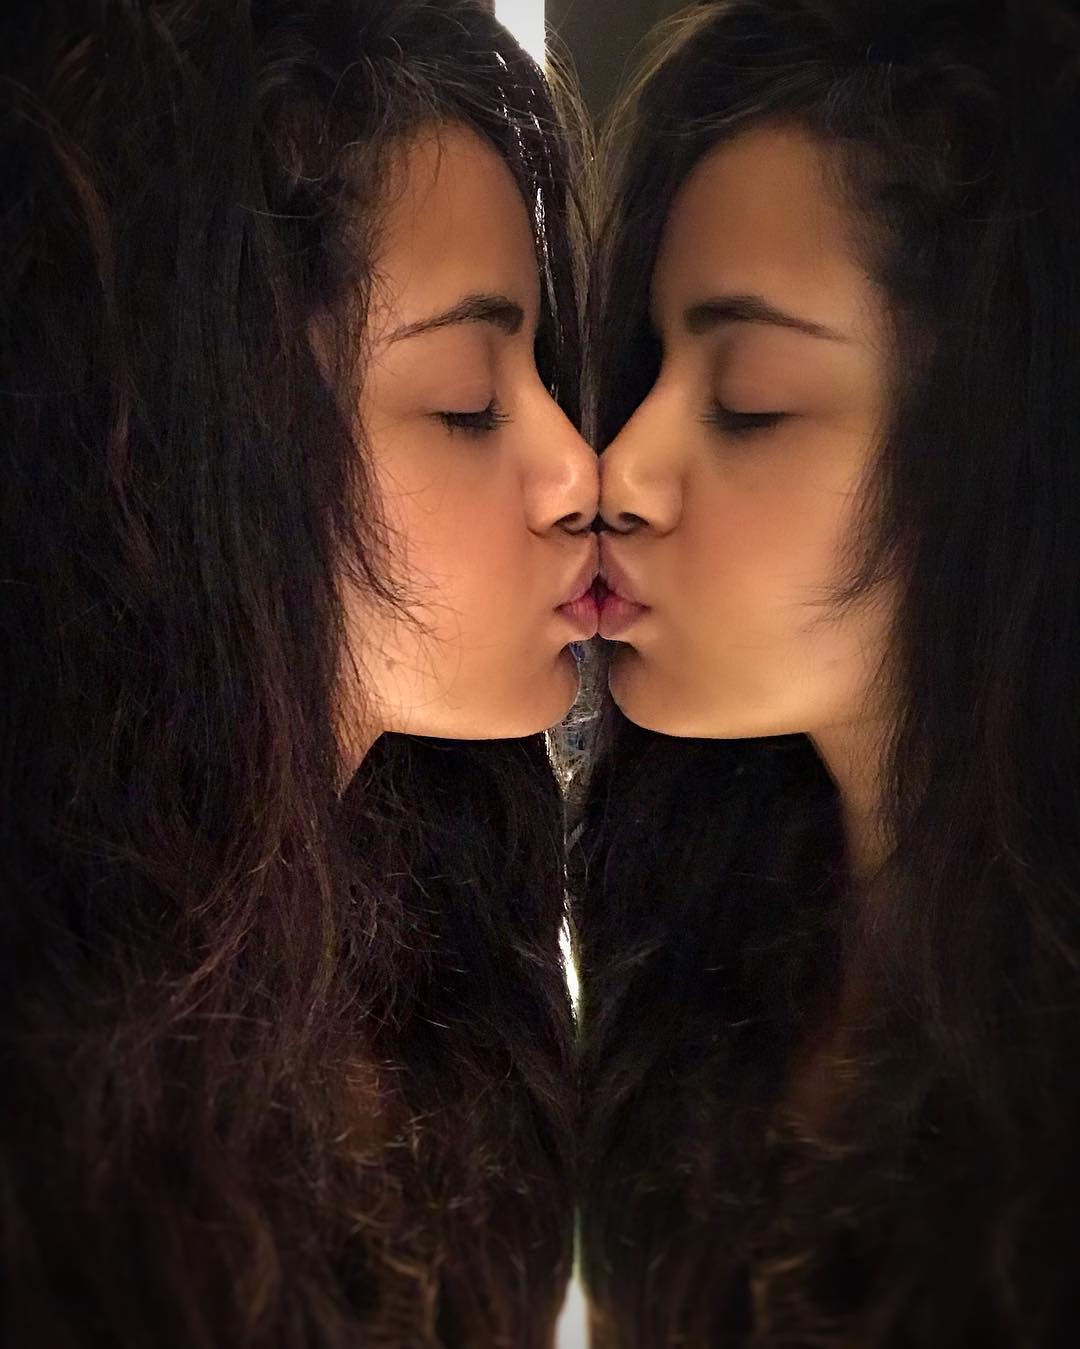 Lesbian pst. Две девушки любовь. Поцелуй девушек. Девушки целуются. Поцелуй двух девушек.